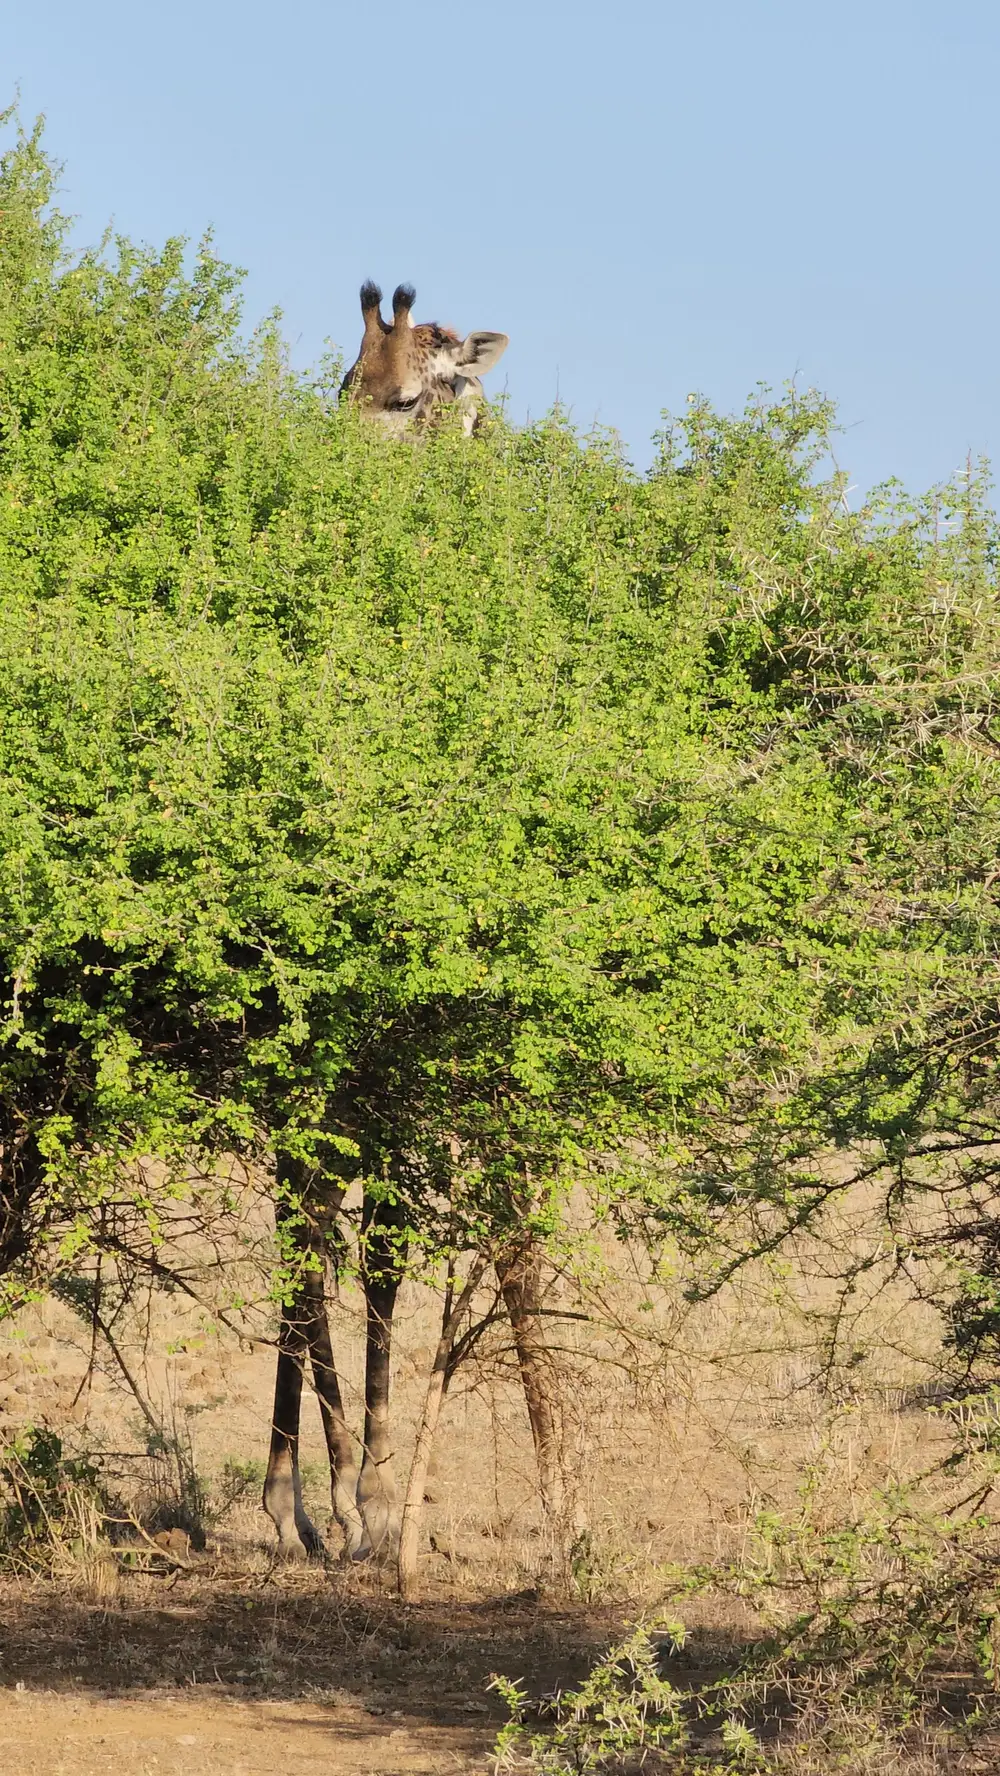 Giraffe behind a tree